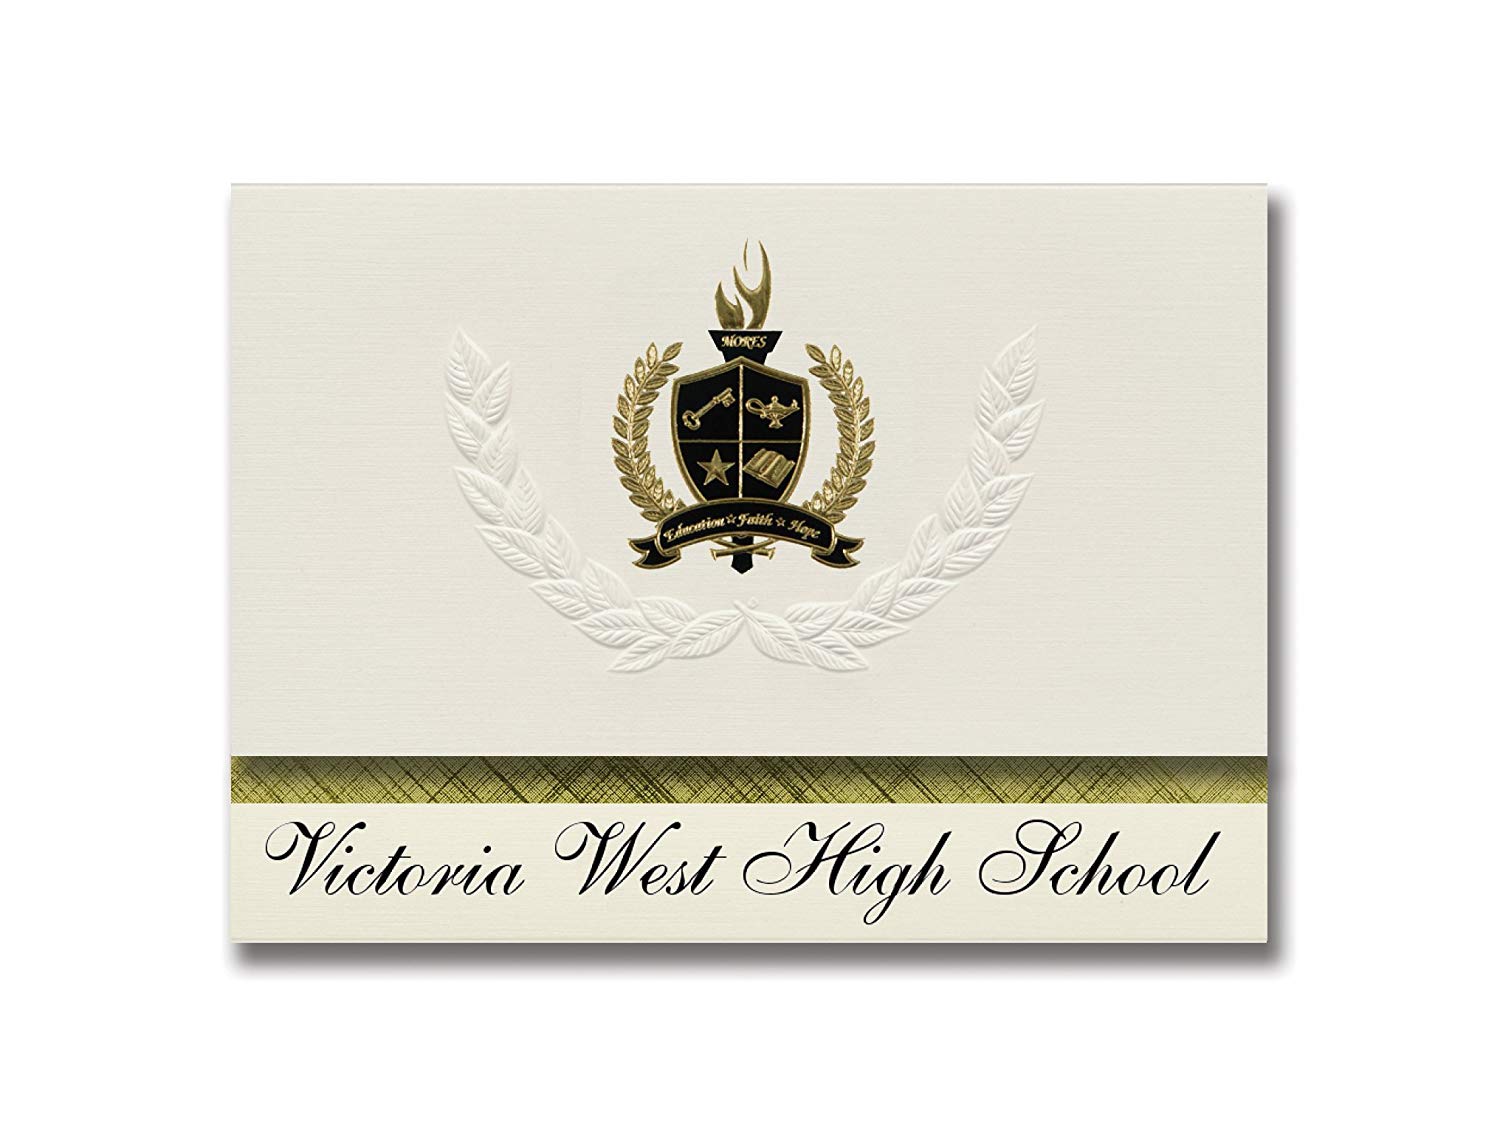 Victoria West High School Logo - Amazon.com : Signature Announcements Victoria West High School ...